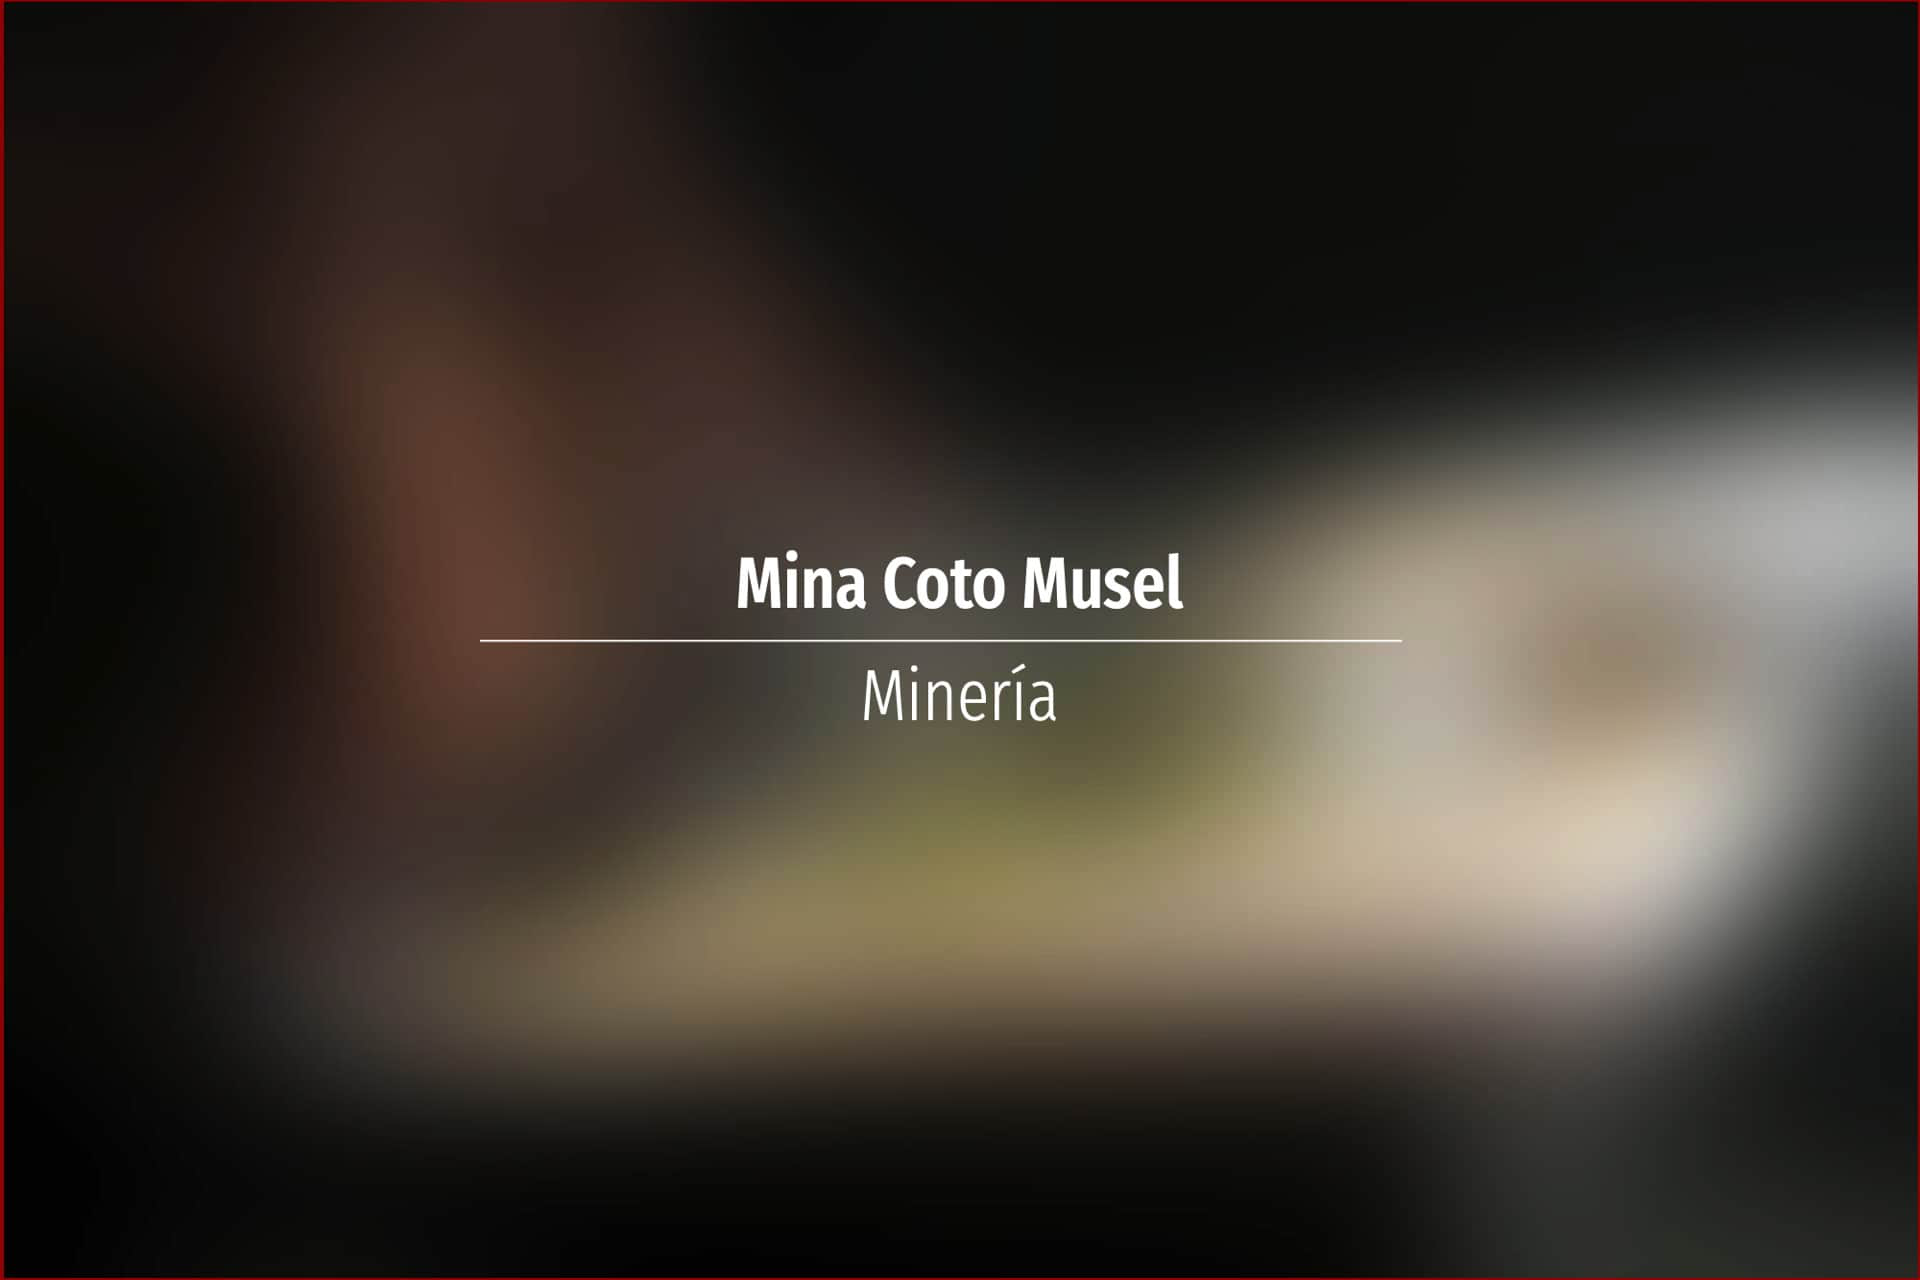 Mina Coto Musel